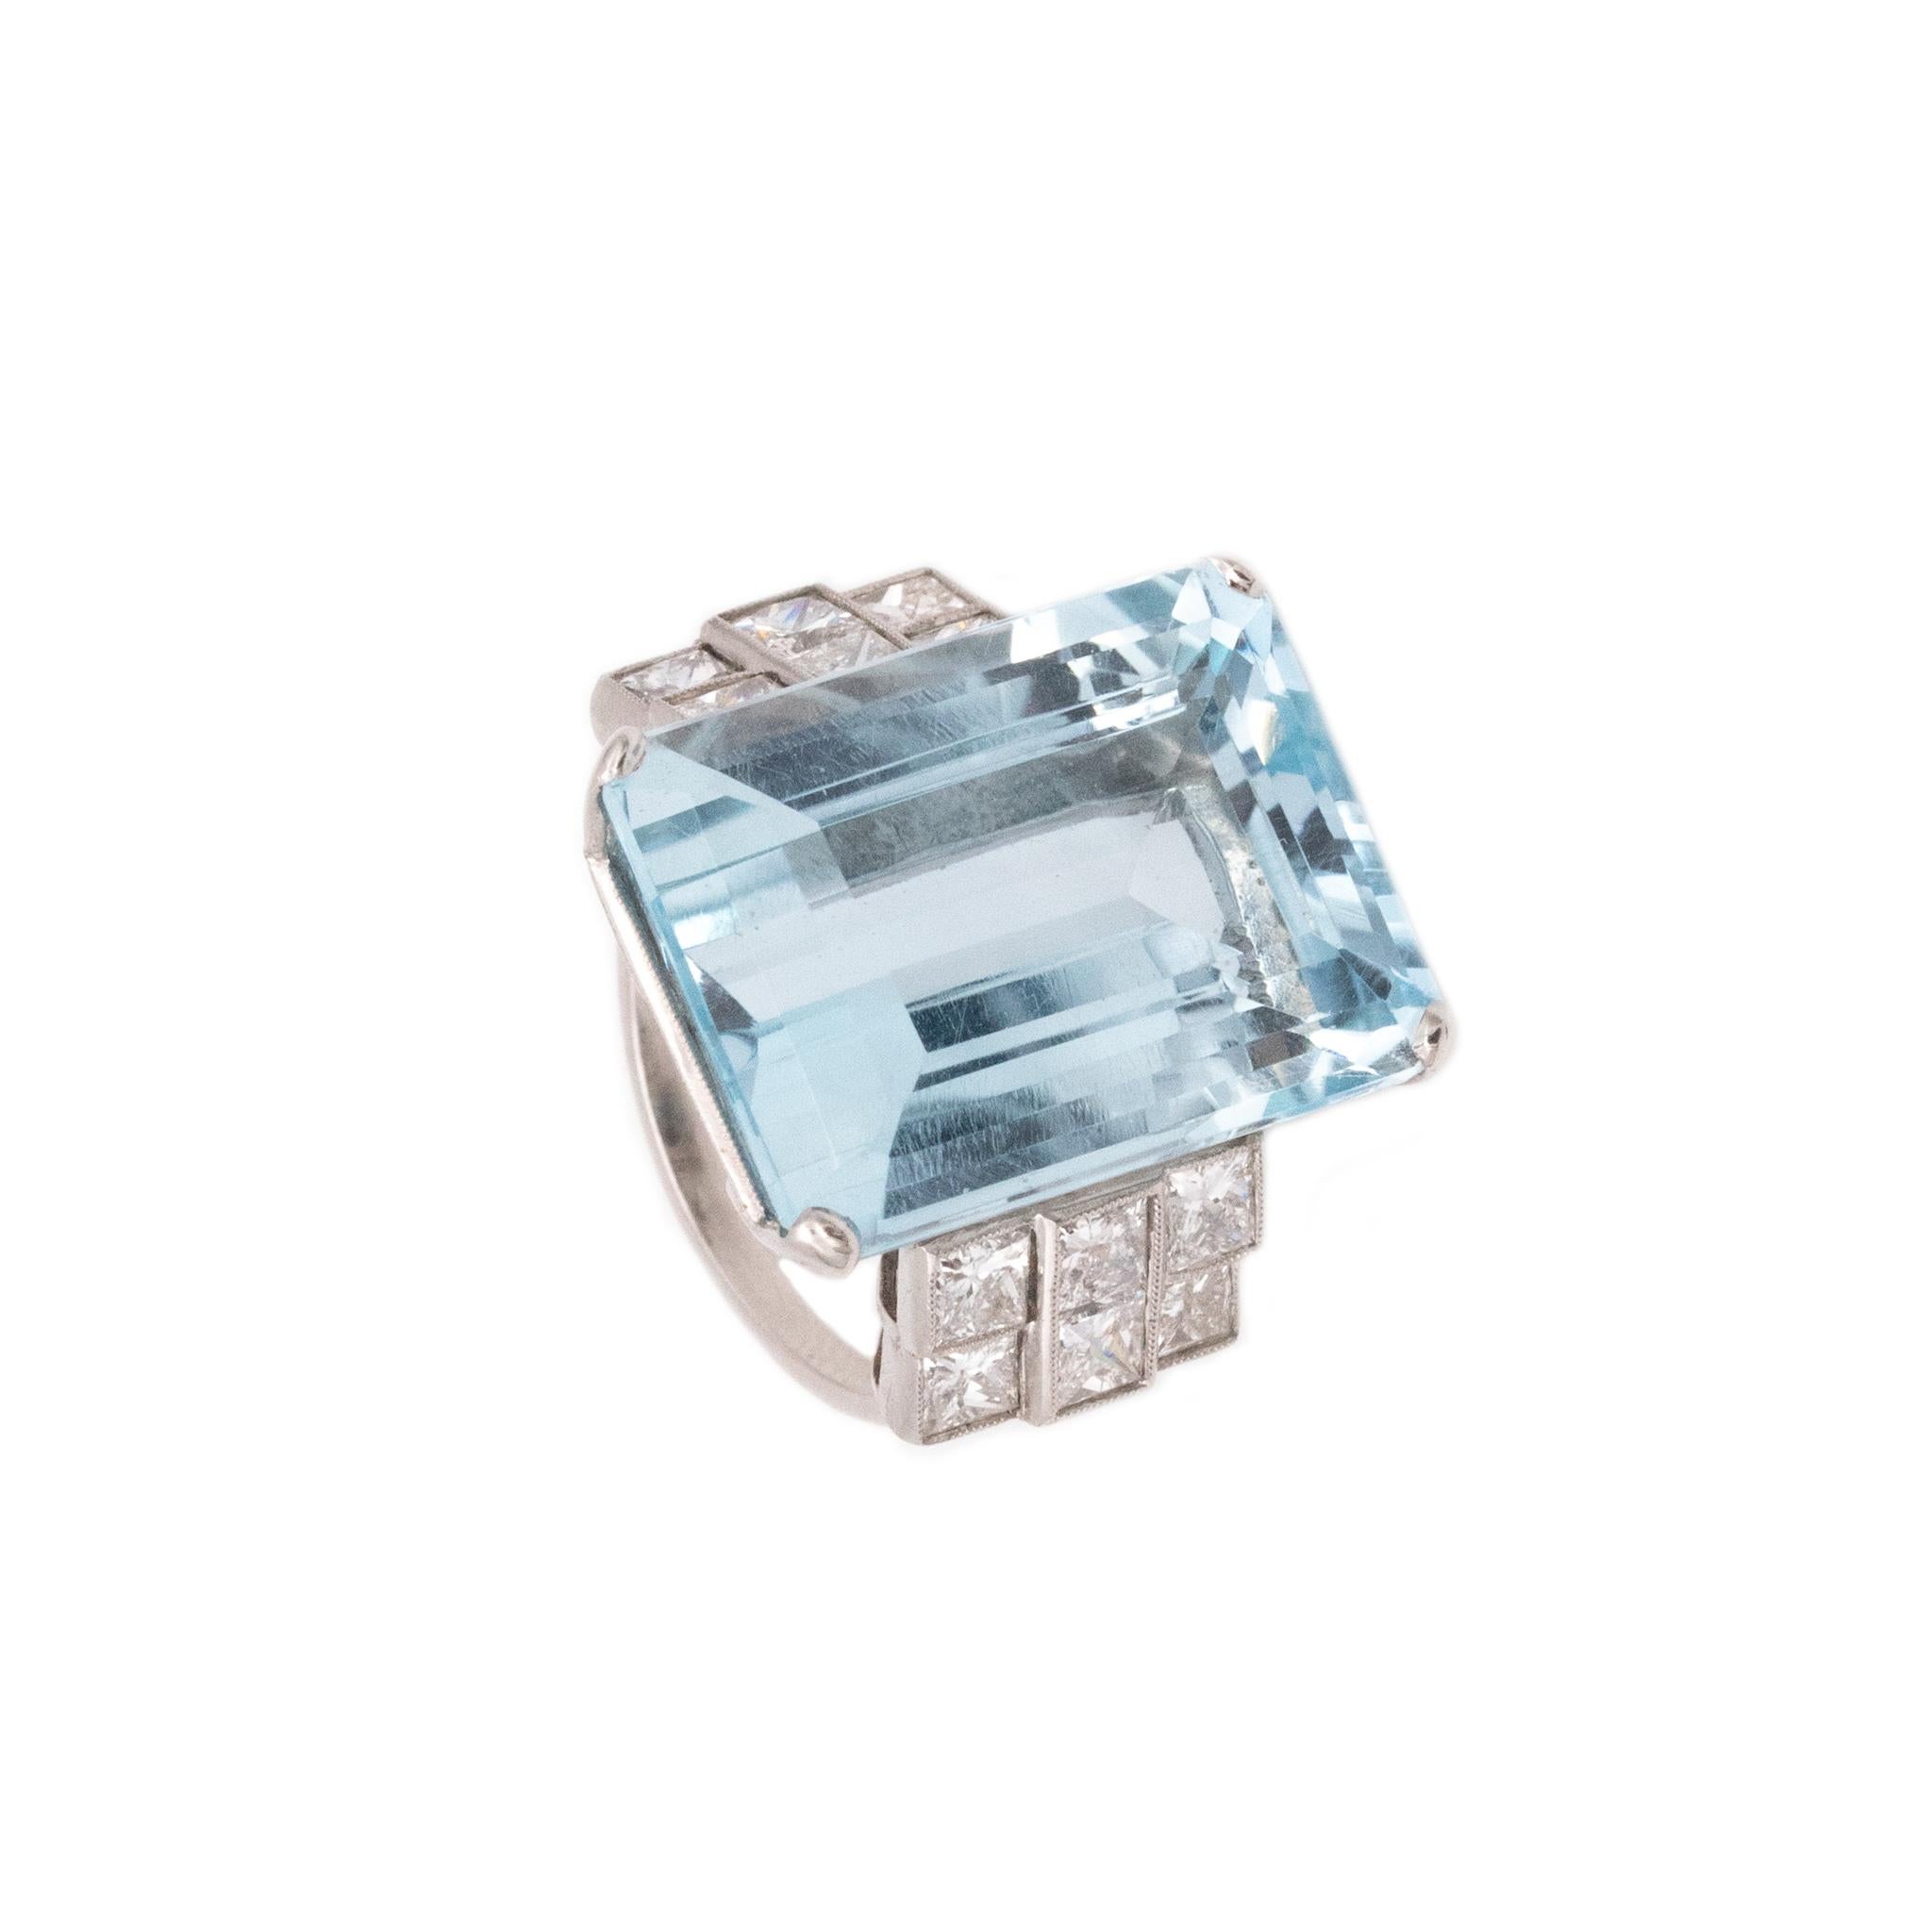 Platinum 1938 Art Deco Statement Ring with 28.44 Cts in Aquamarine and Diamonds 4